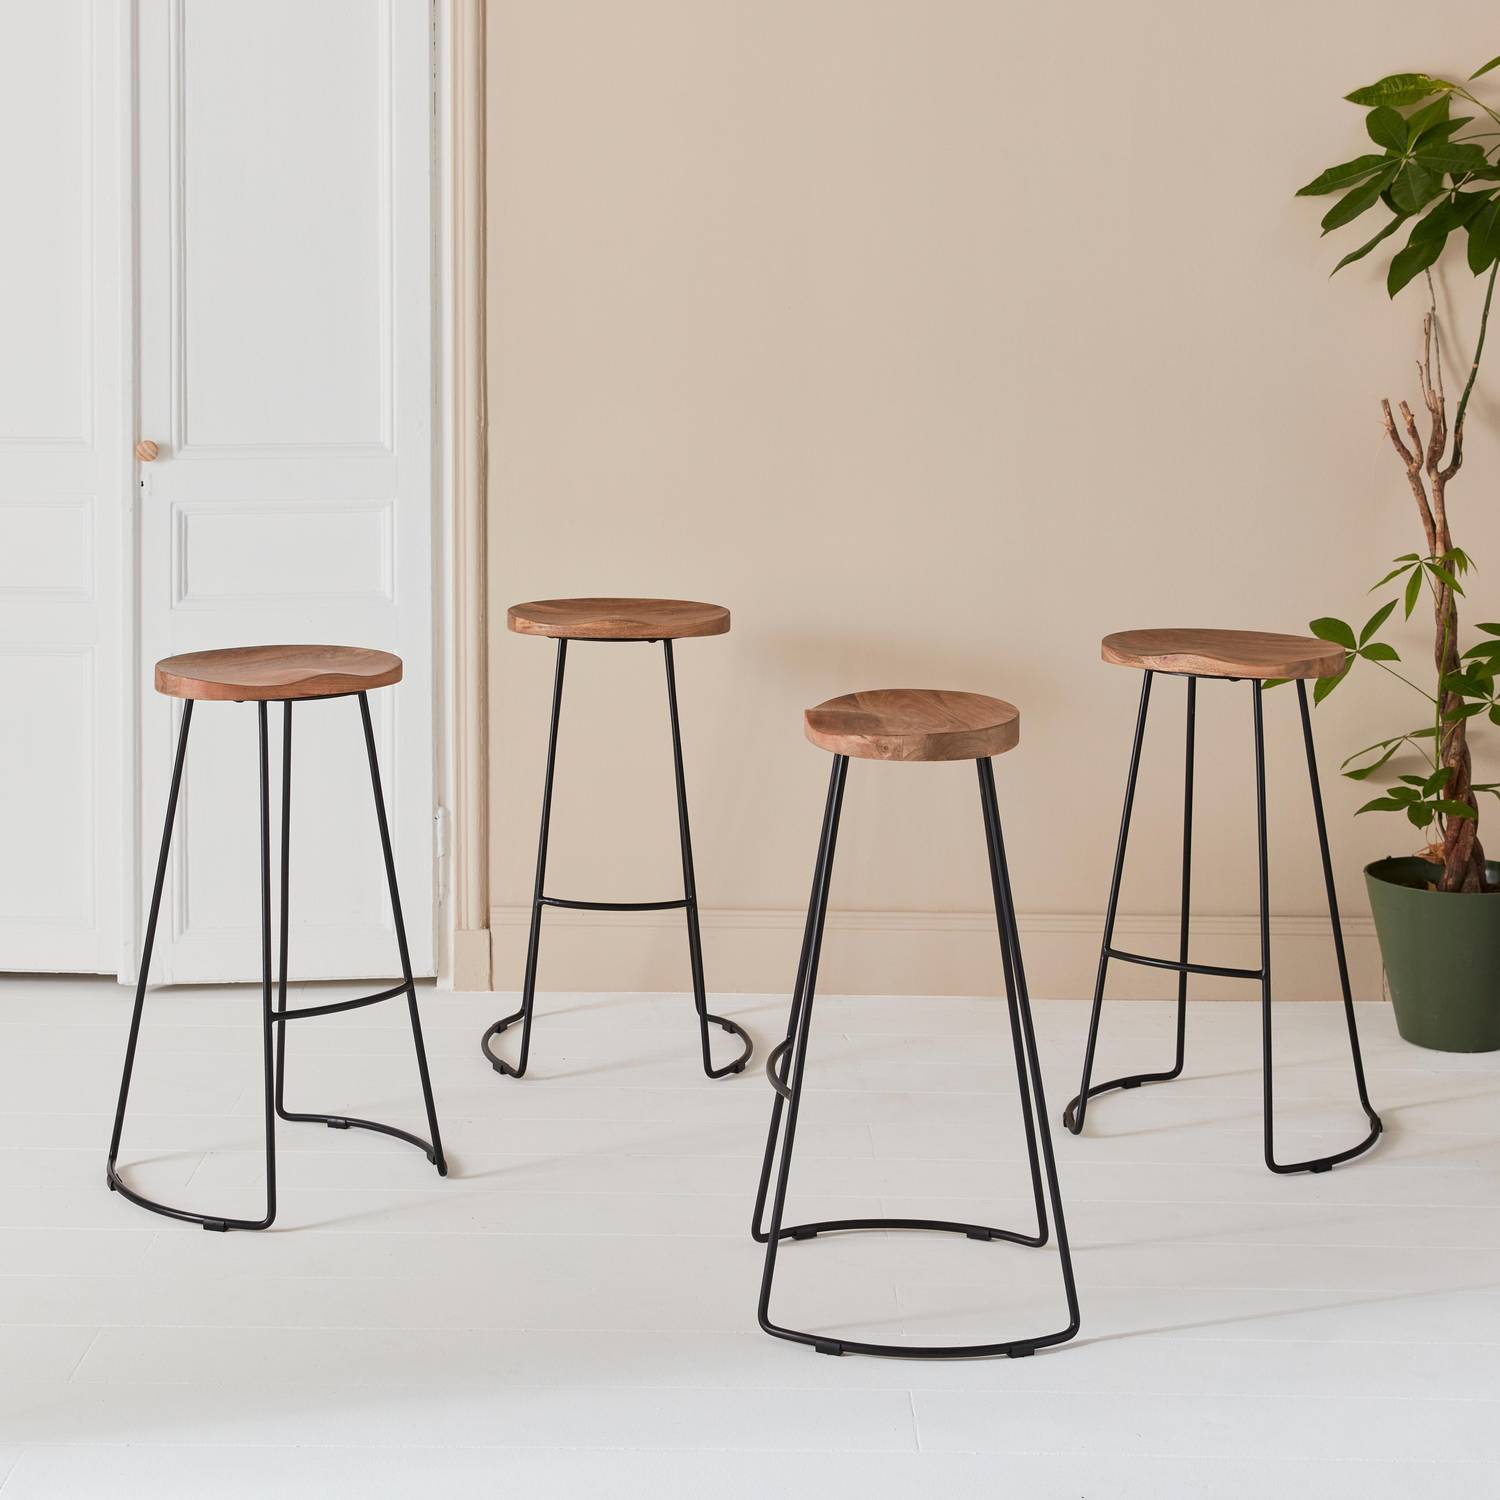 Set of 4 industrial metal and wooden bar stools, 47x40x75cm, Jaya, Mango wood seat, black metal legs Photo2